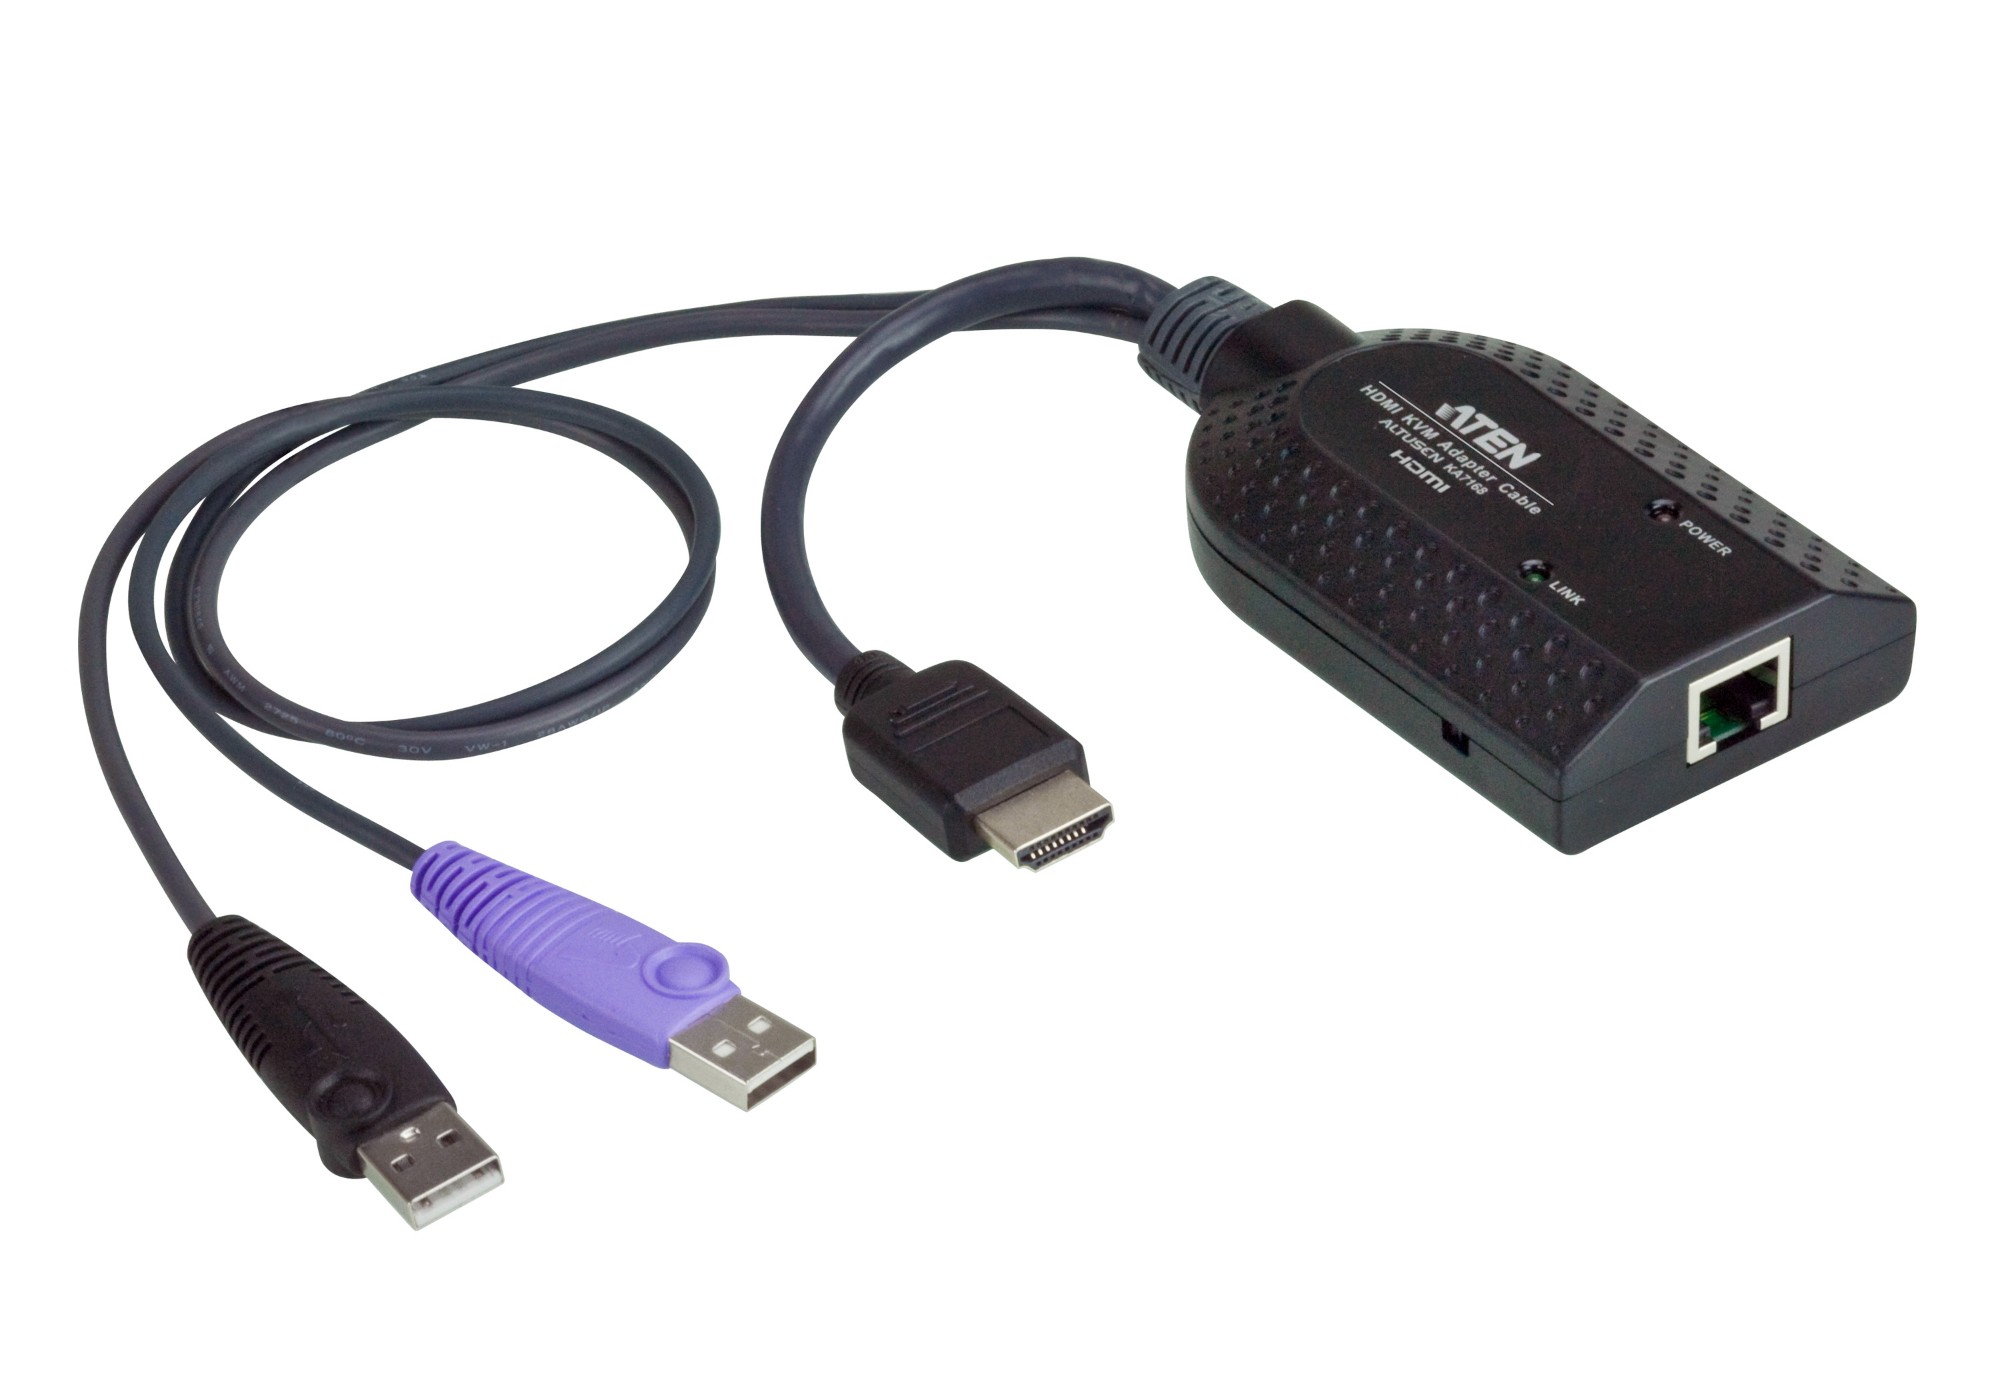 KA7168 ATEN Digital Video HDMI USB KVM Adapter Cable with Virtual Media & Smart Card Reader Support